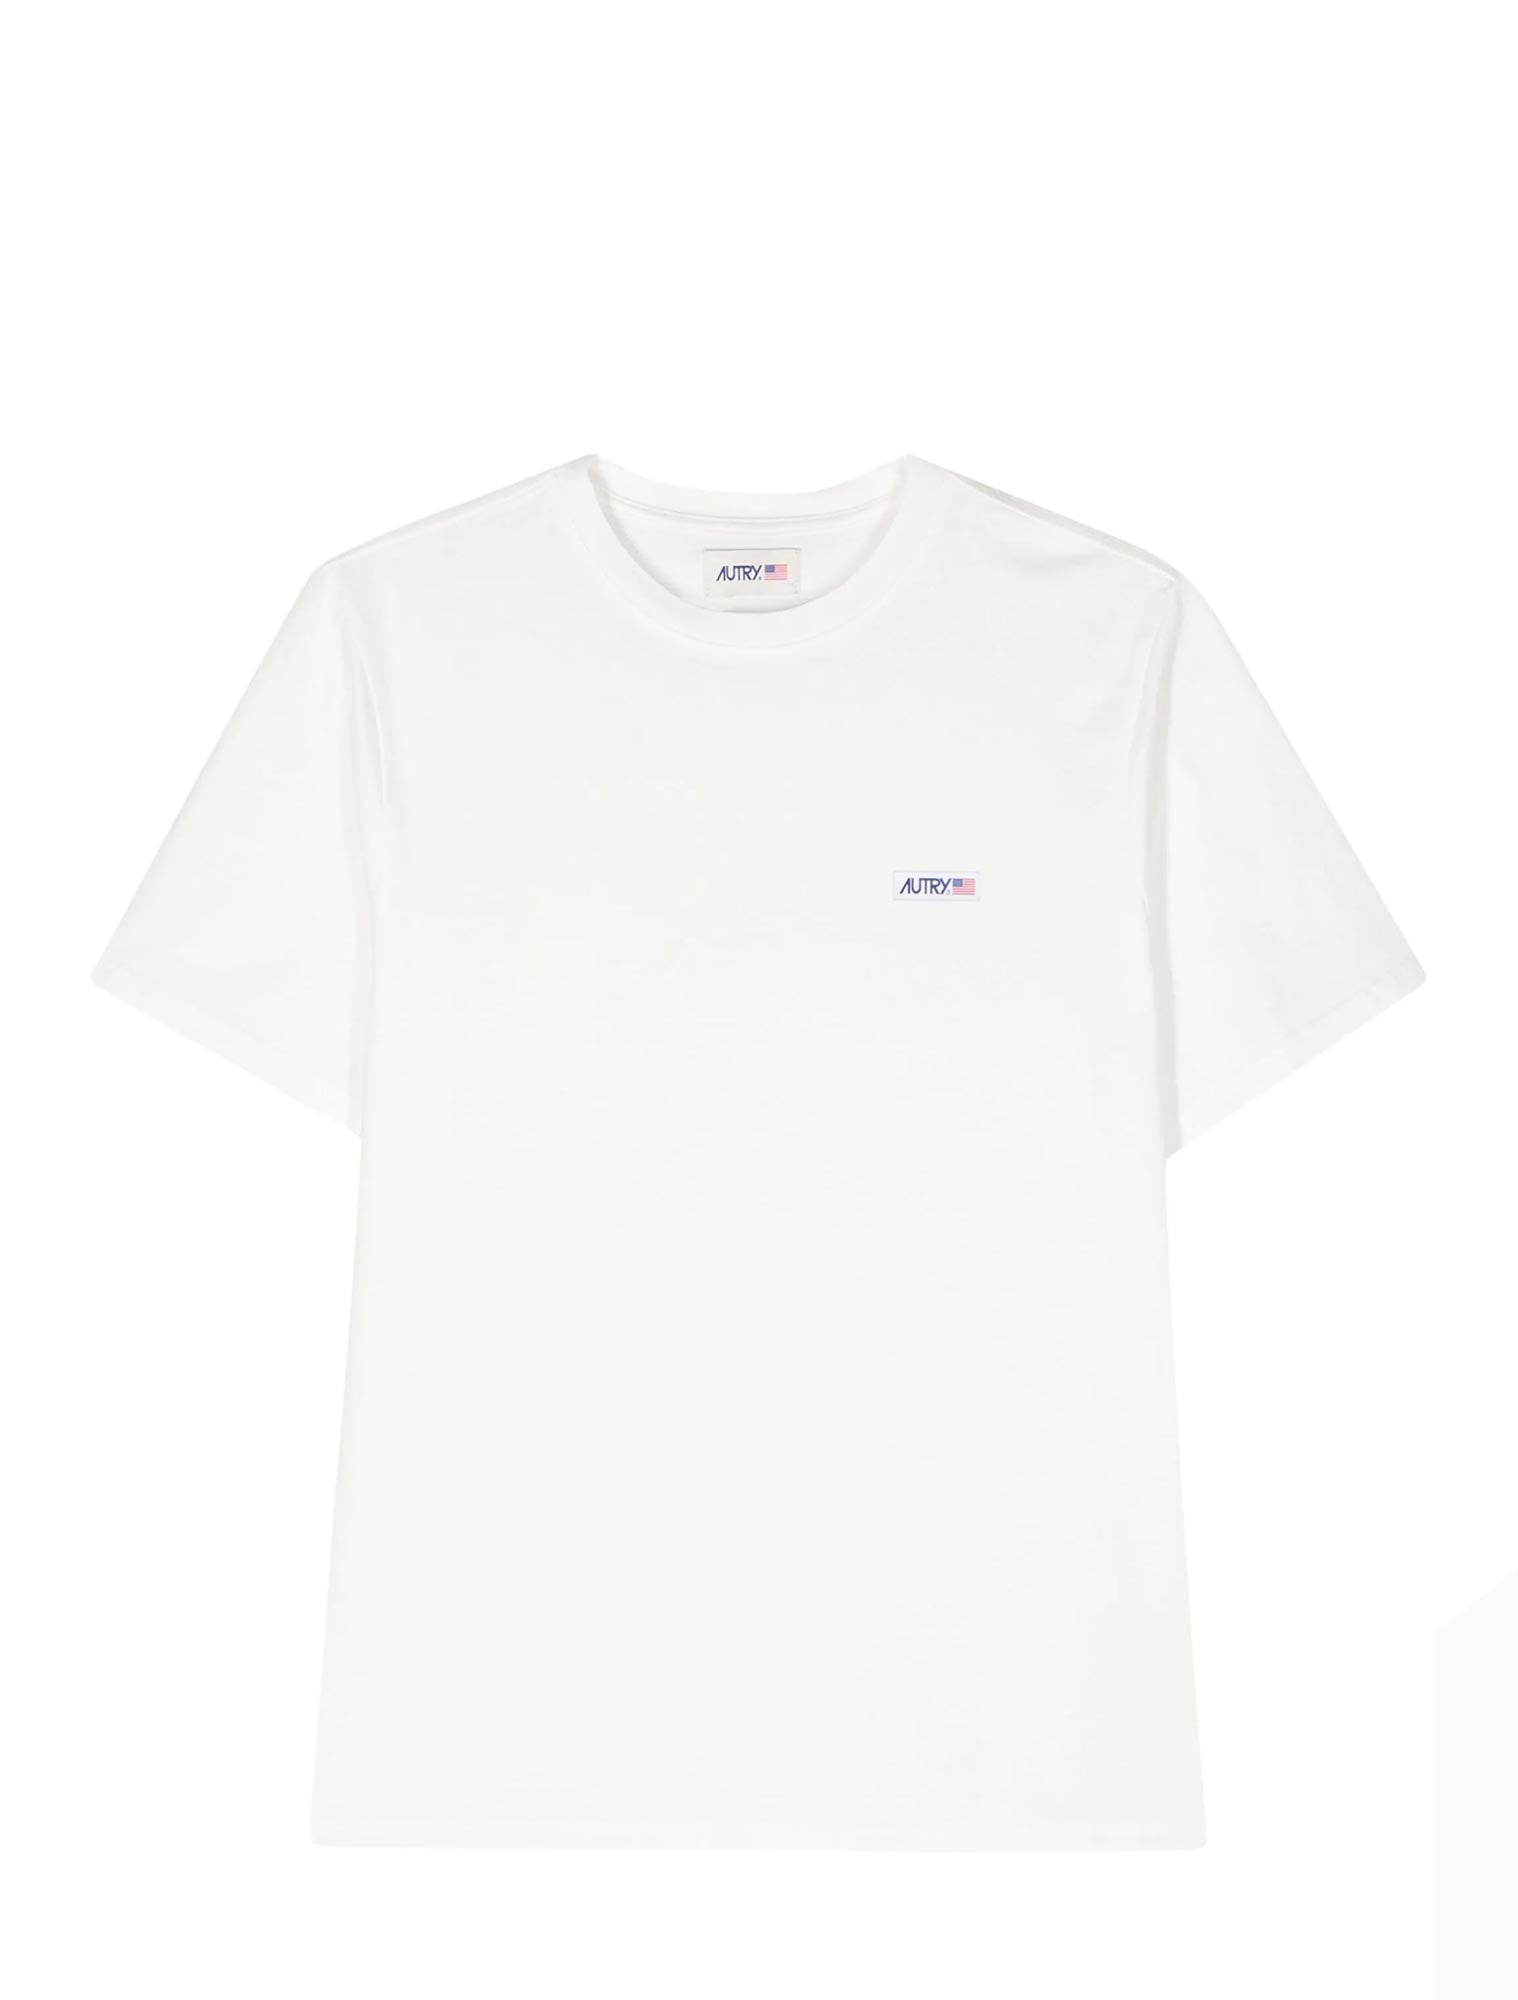 Autry T-Shirt Uomo Main Man TSPM502W-White